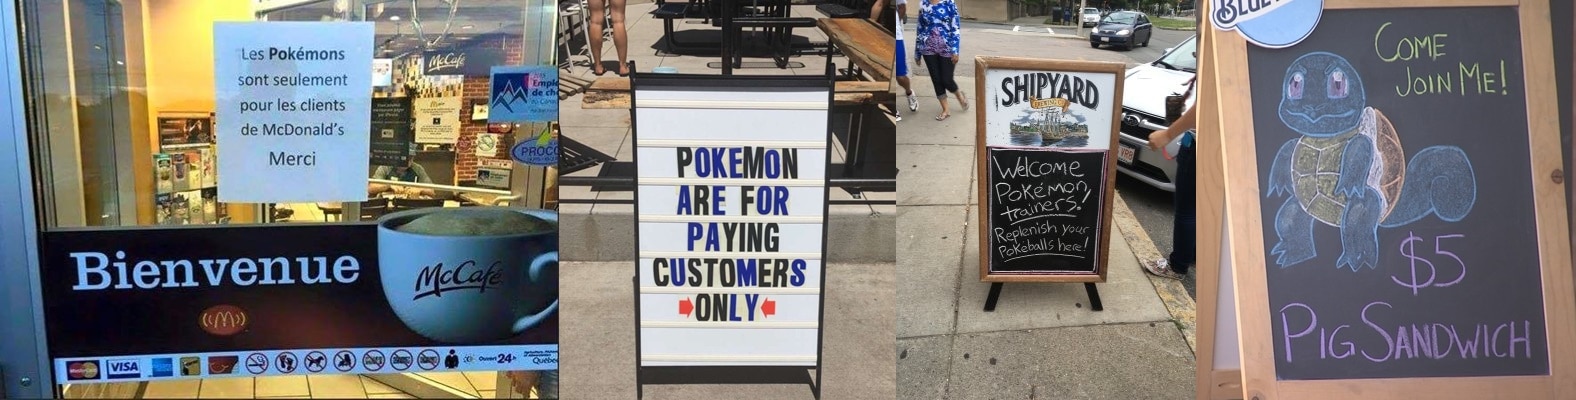 pokemon-go-actions-marketing